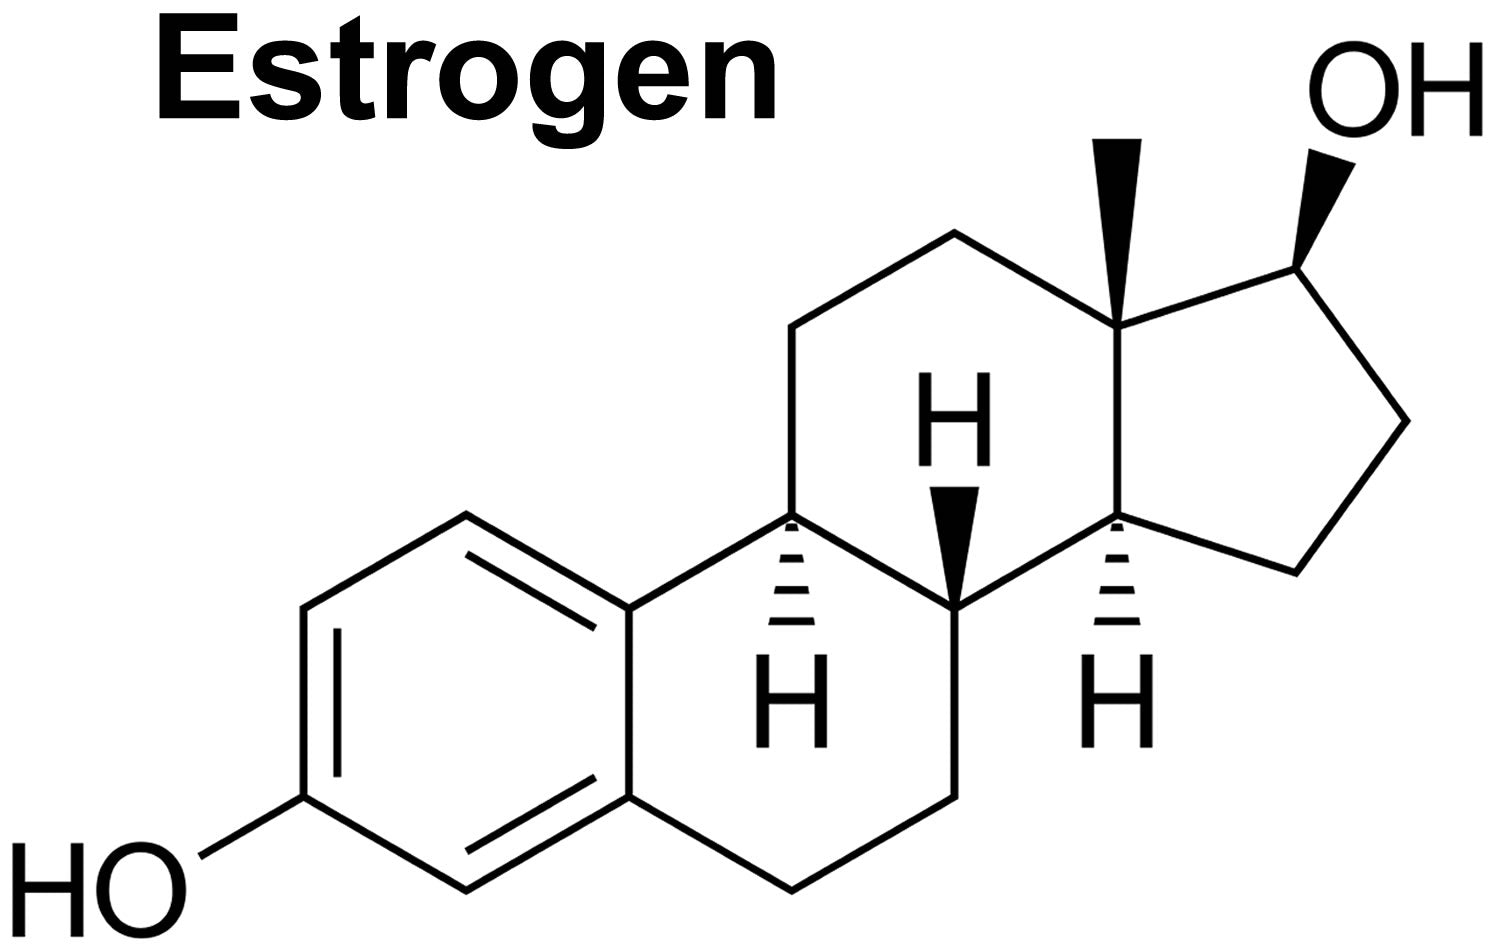 Exploring the Relationship Between CBD and Estrogen Production